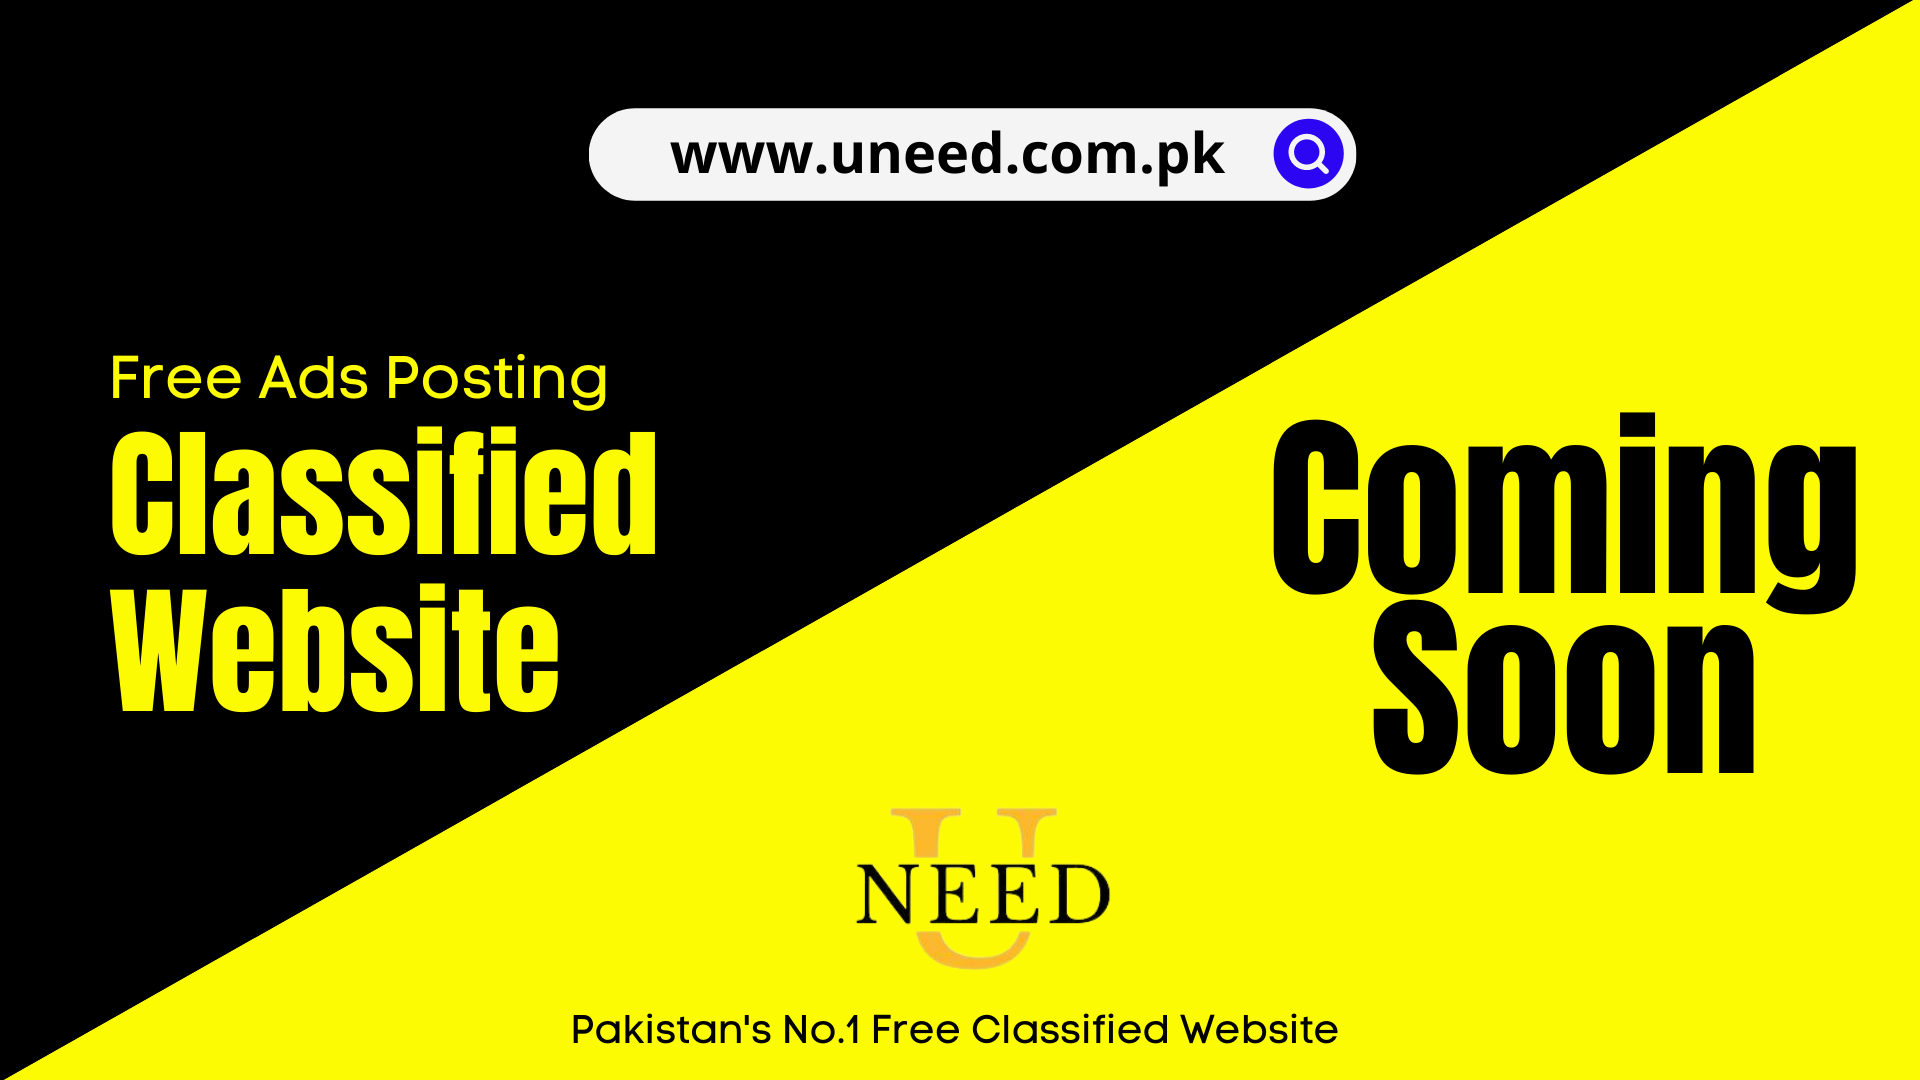 www.uneed.com.pk ©

Free Ads Posting

  

NEED

Pakistan's No.1 Free Classified Website